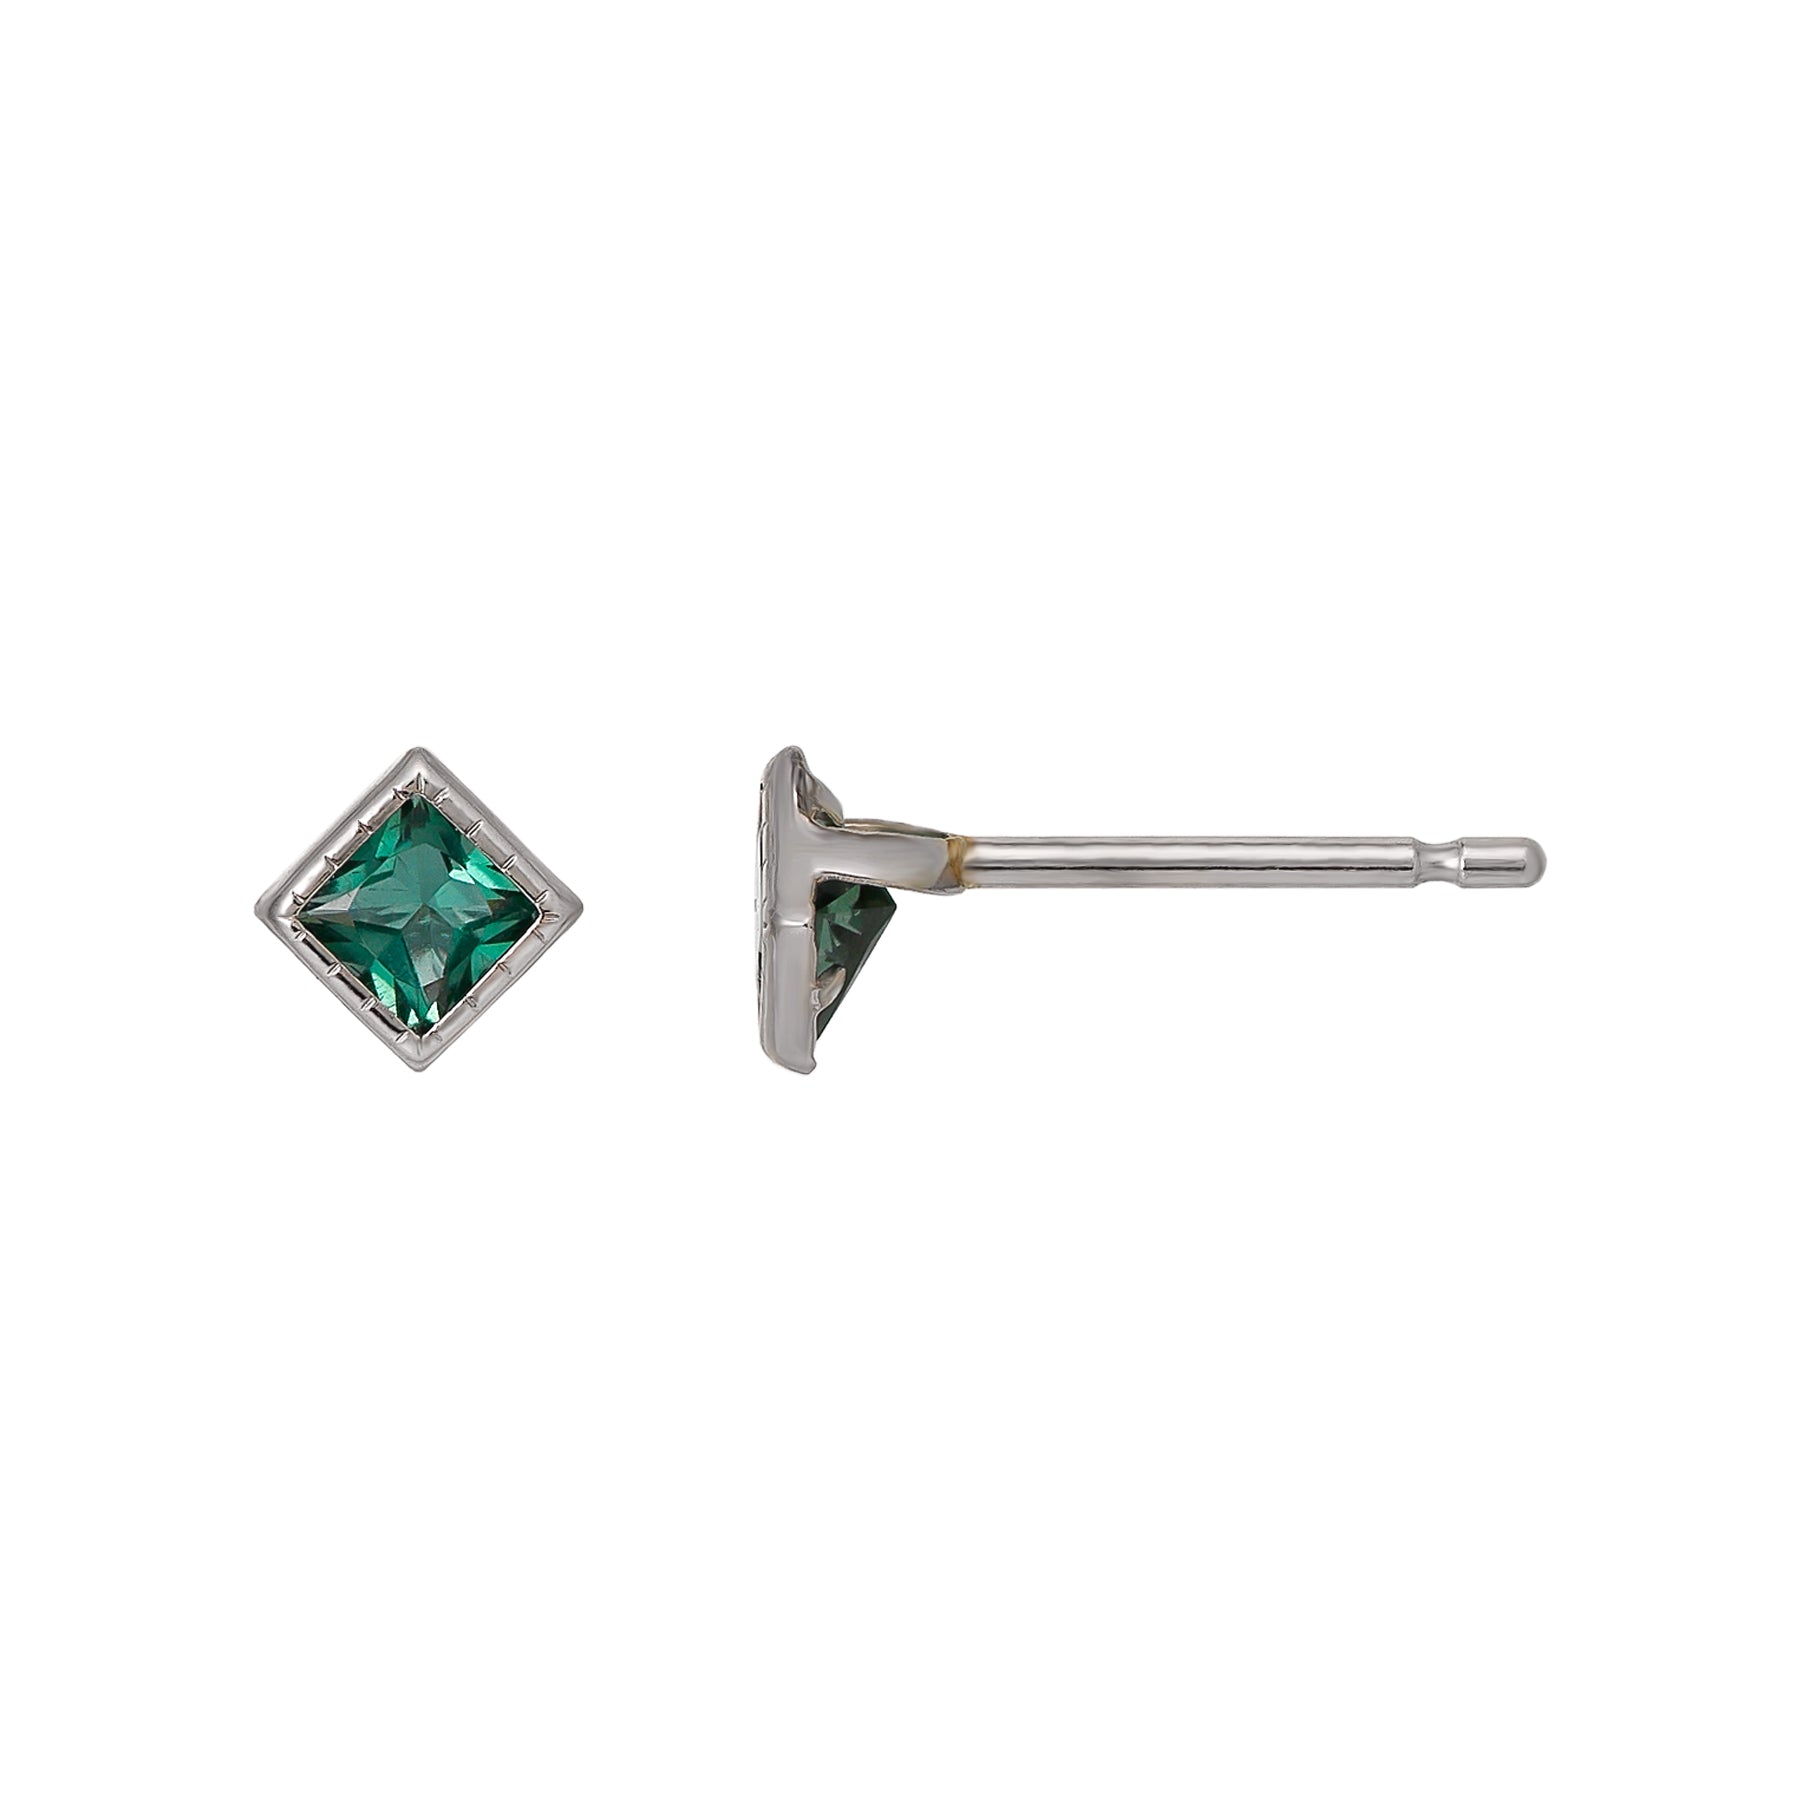 [Second Earrings] Platinum Green Quartz Square Earrings - Product Image